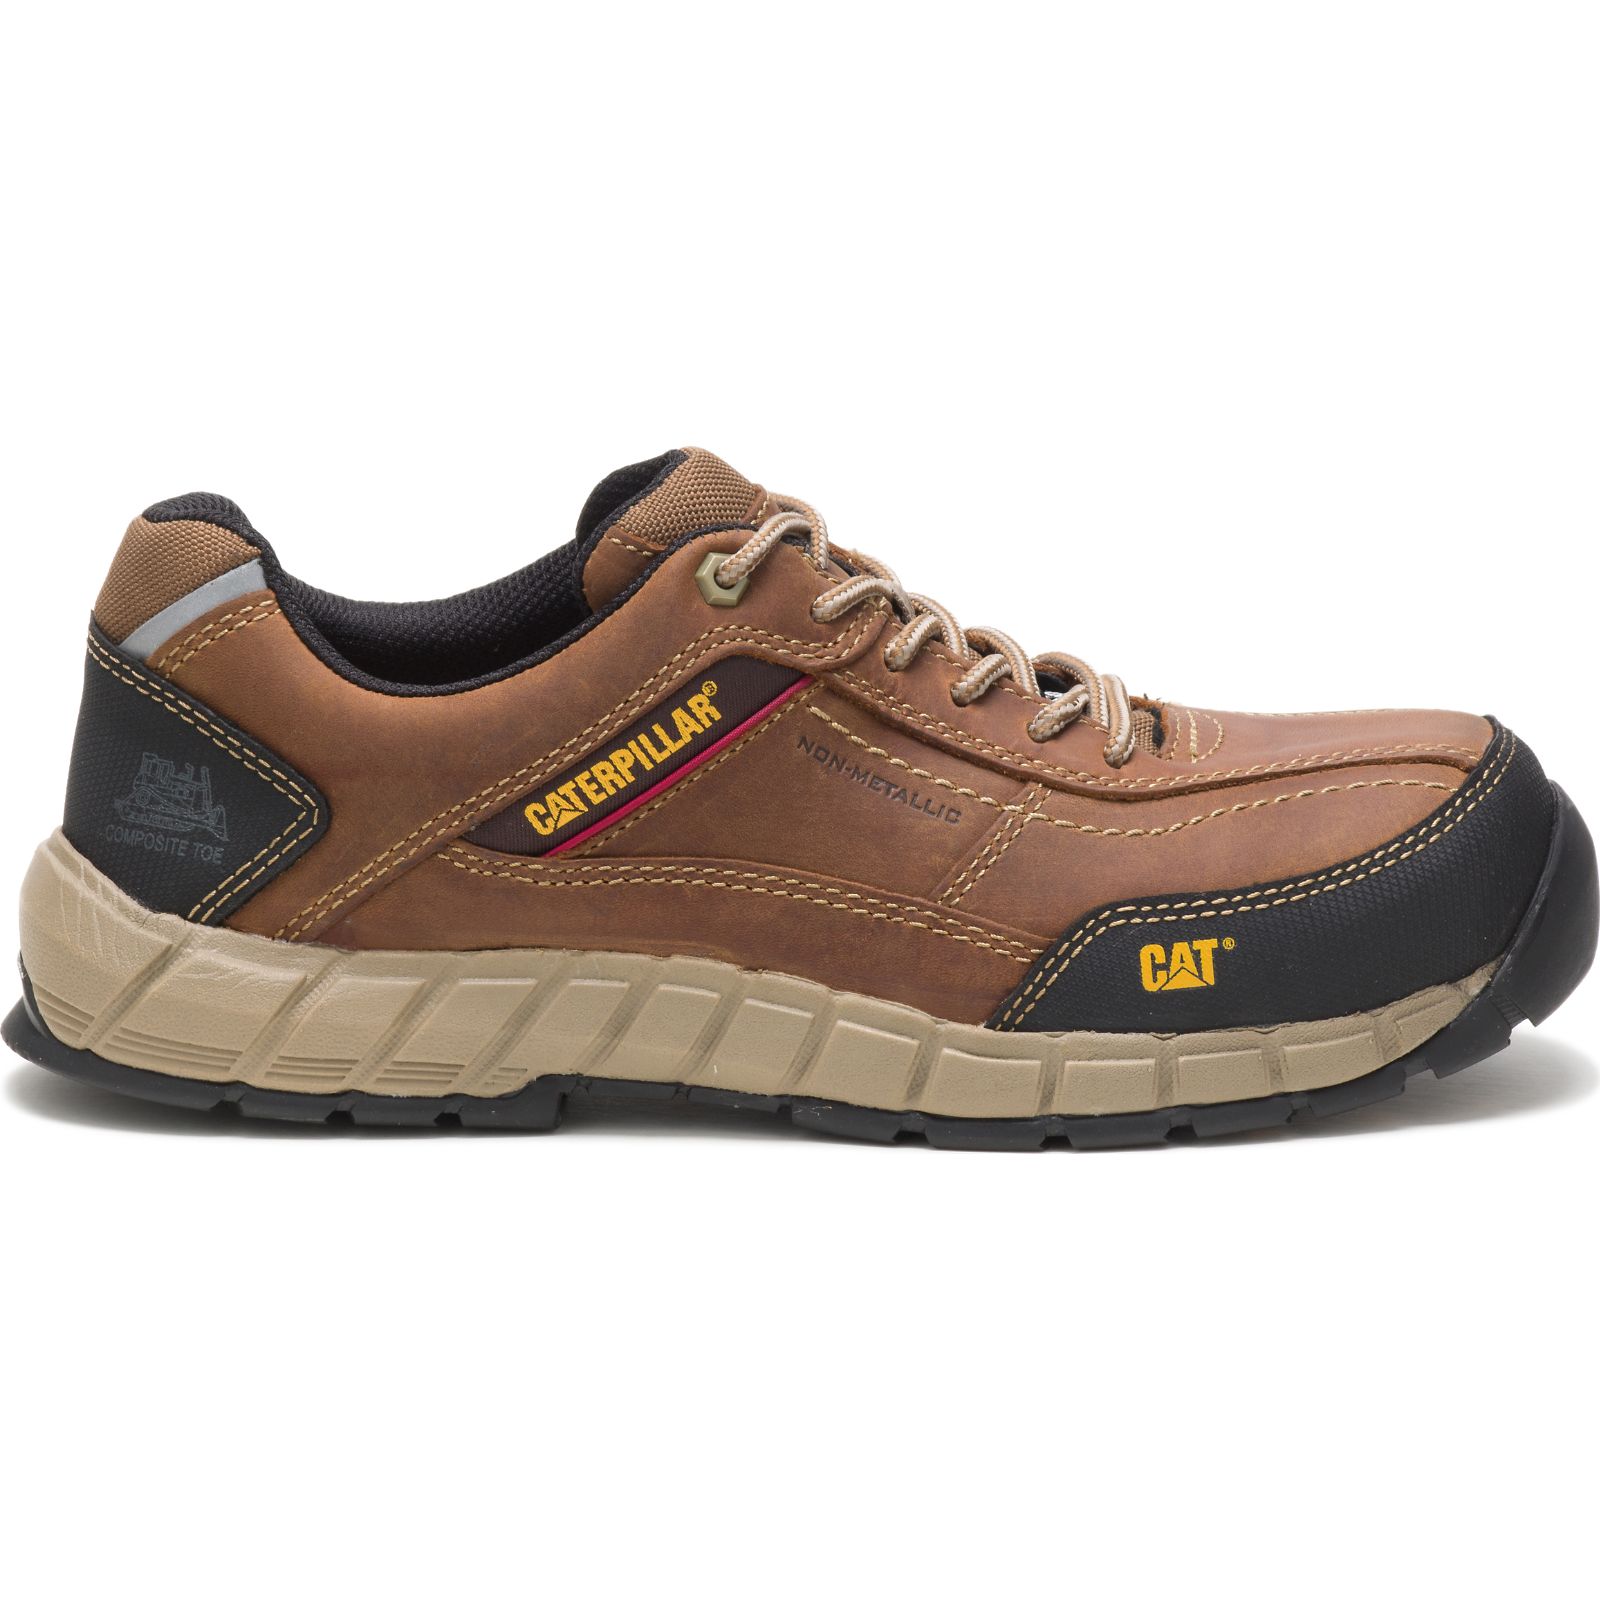 Caterpillar Shoes Online Pakistan - Caterpillar Streamline Leather Composite Toe Mens Work Shoes Brown (342785-UAV)